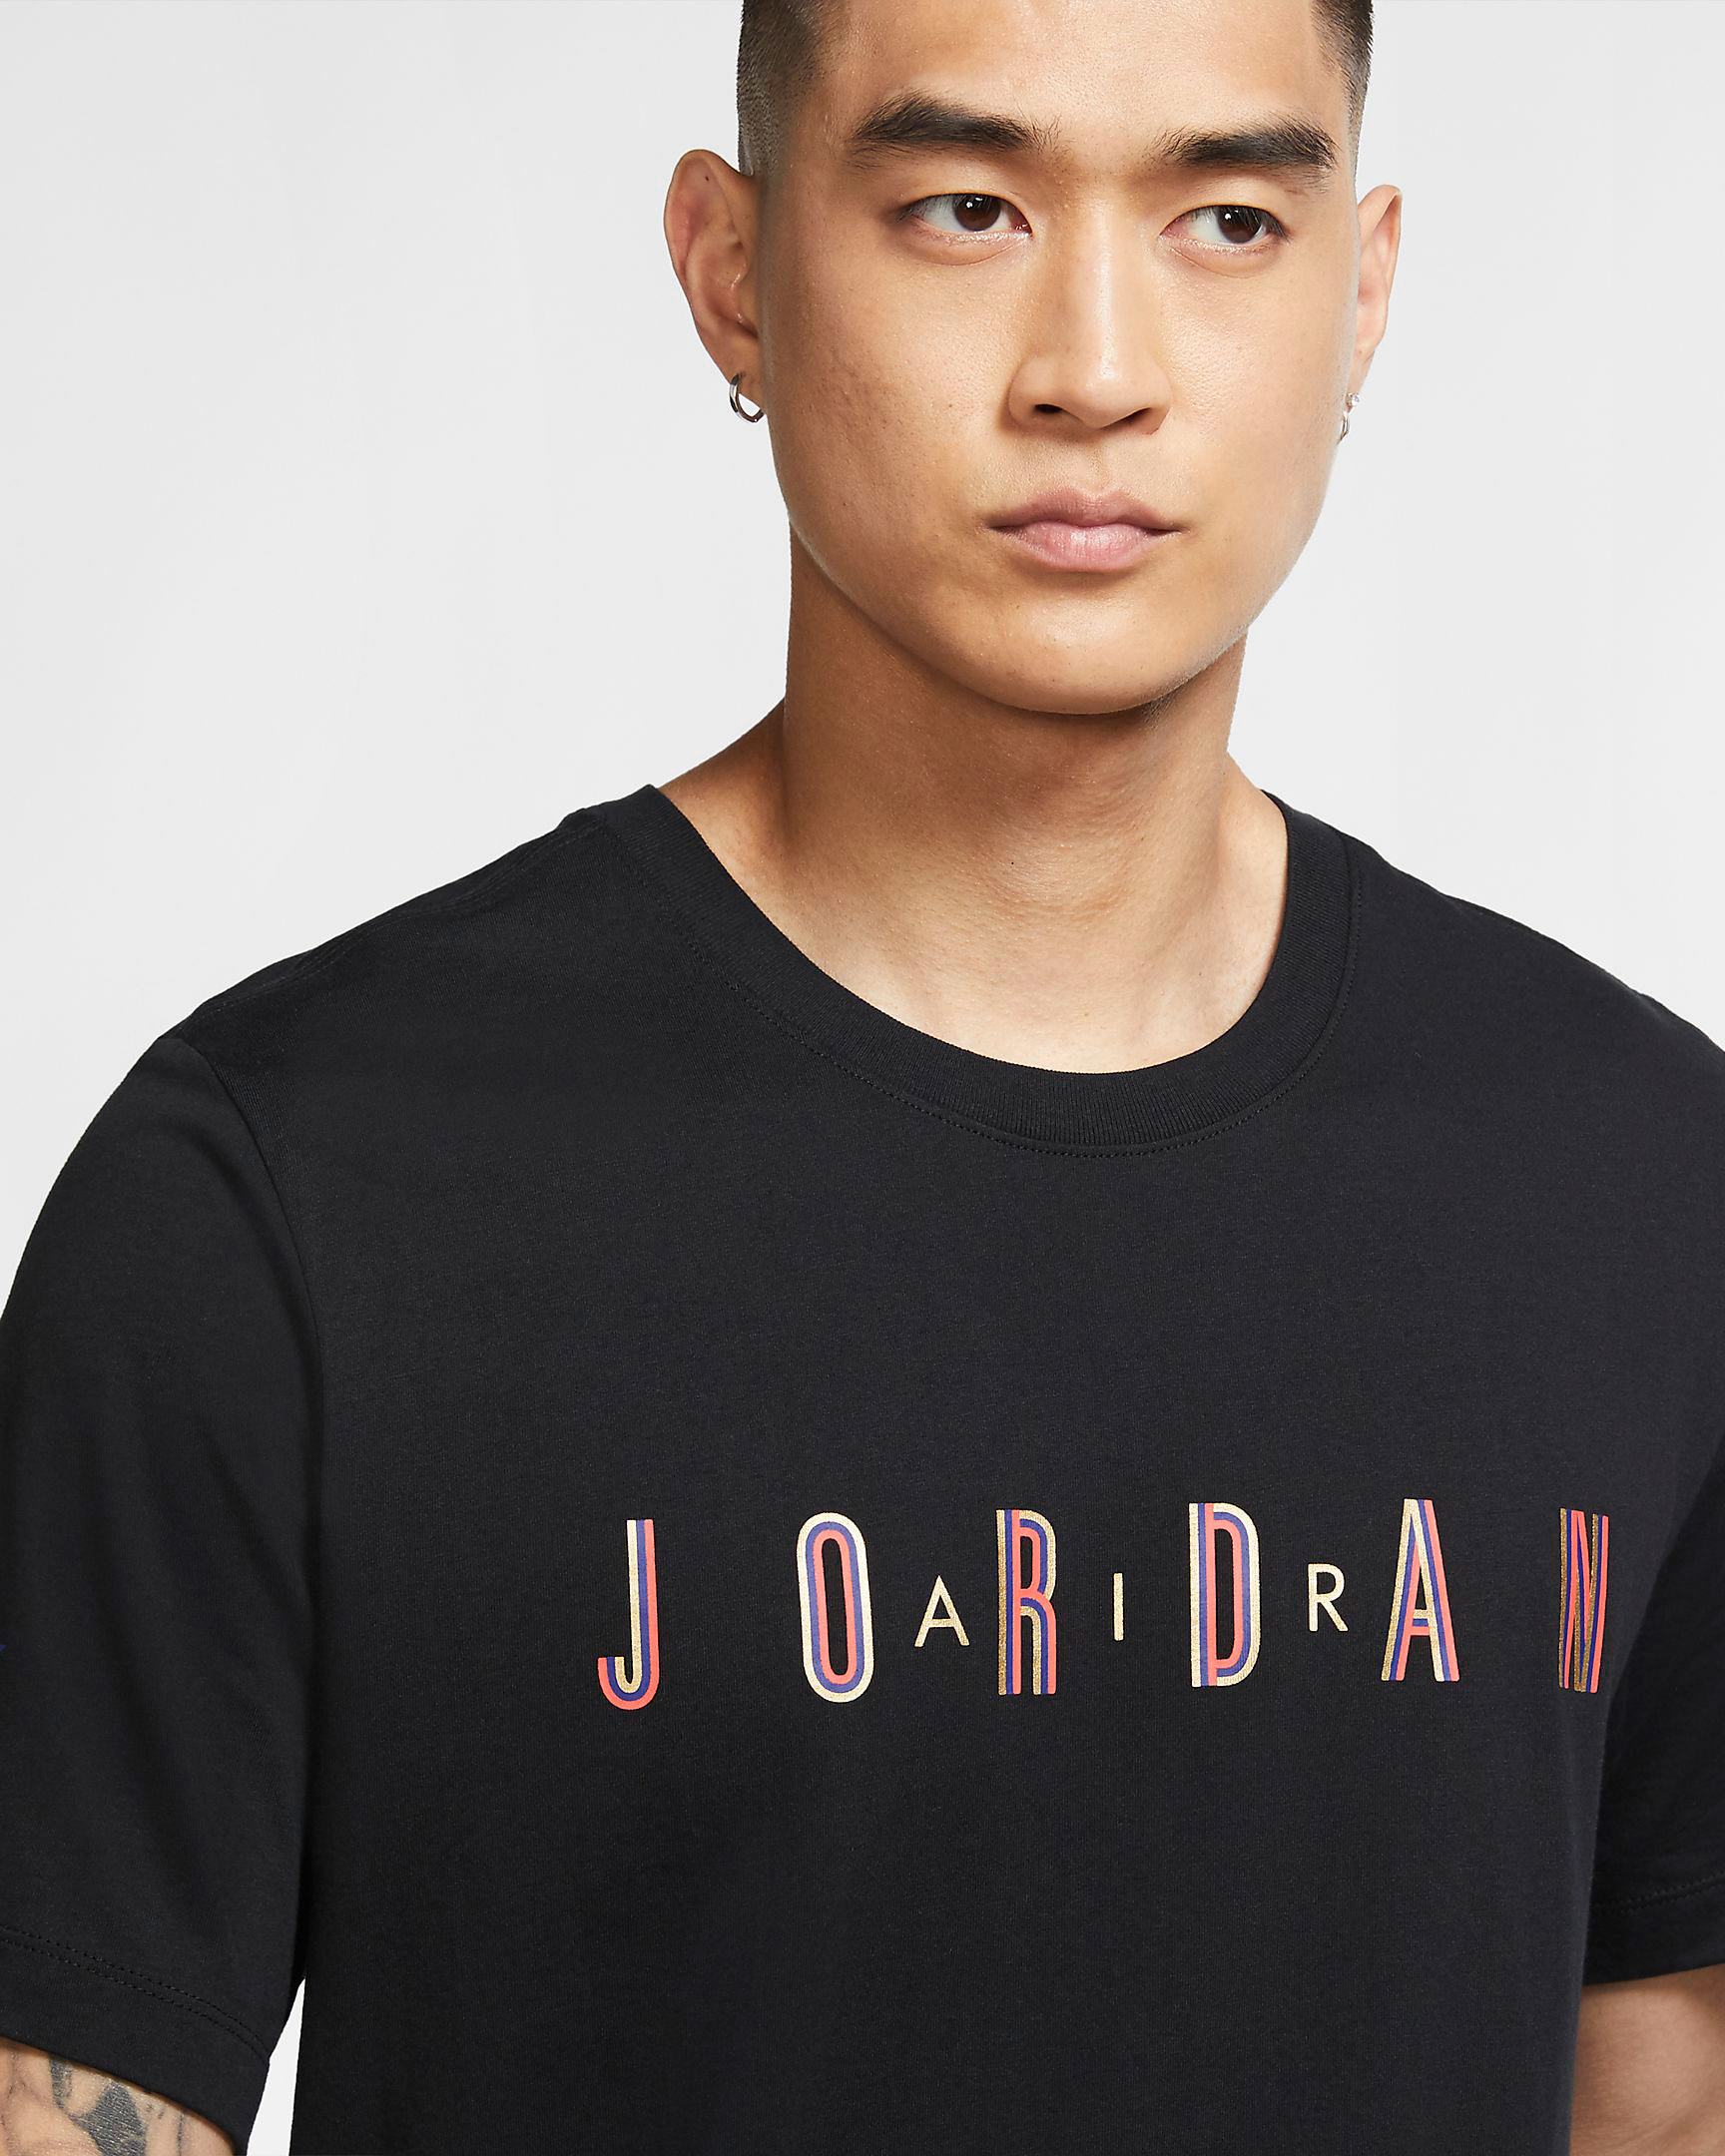 air-jordan-1-low-sweater-nothing-but-net-shirt-match-1